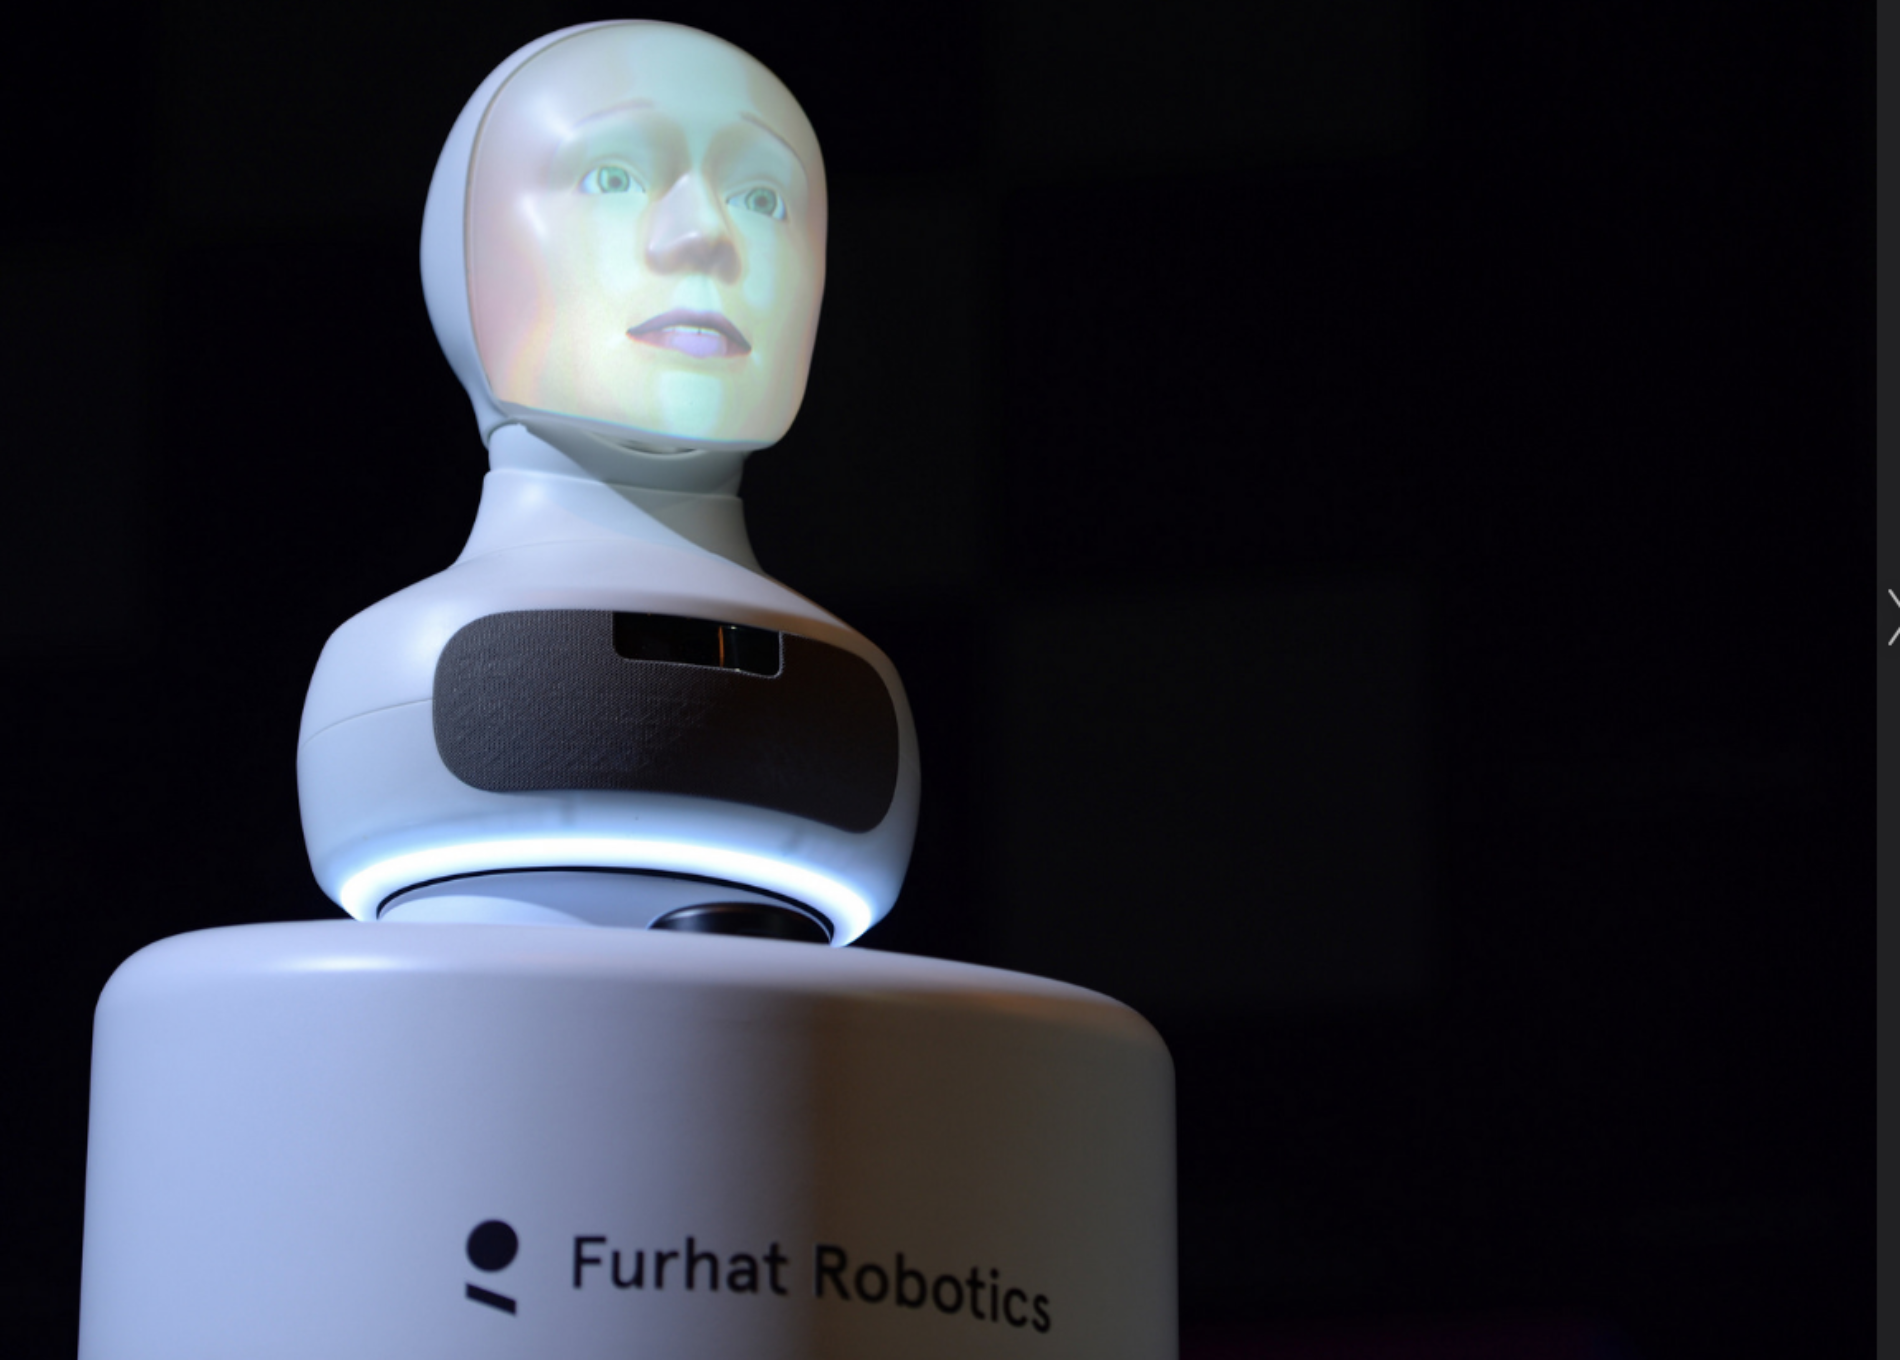 Real Face Robot